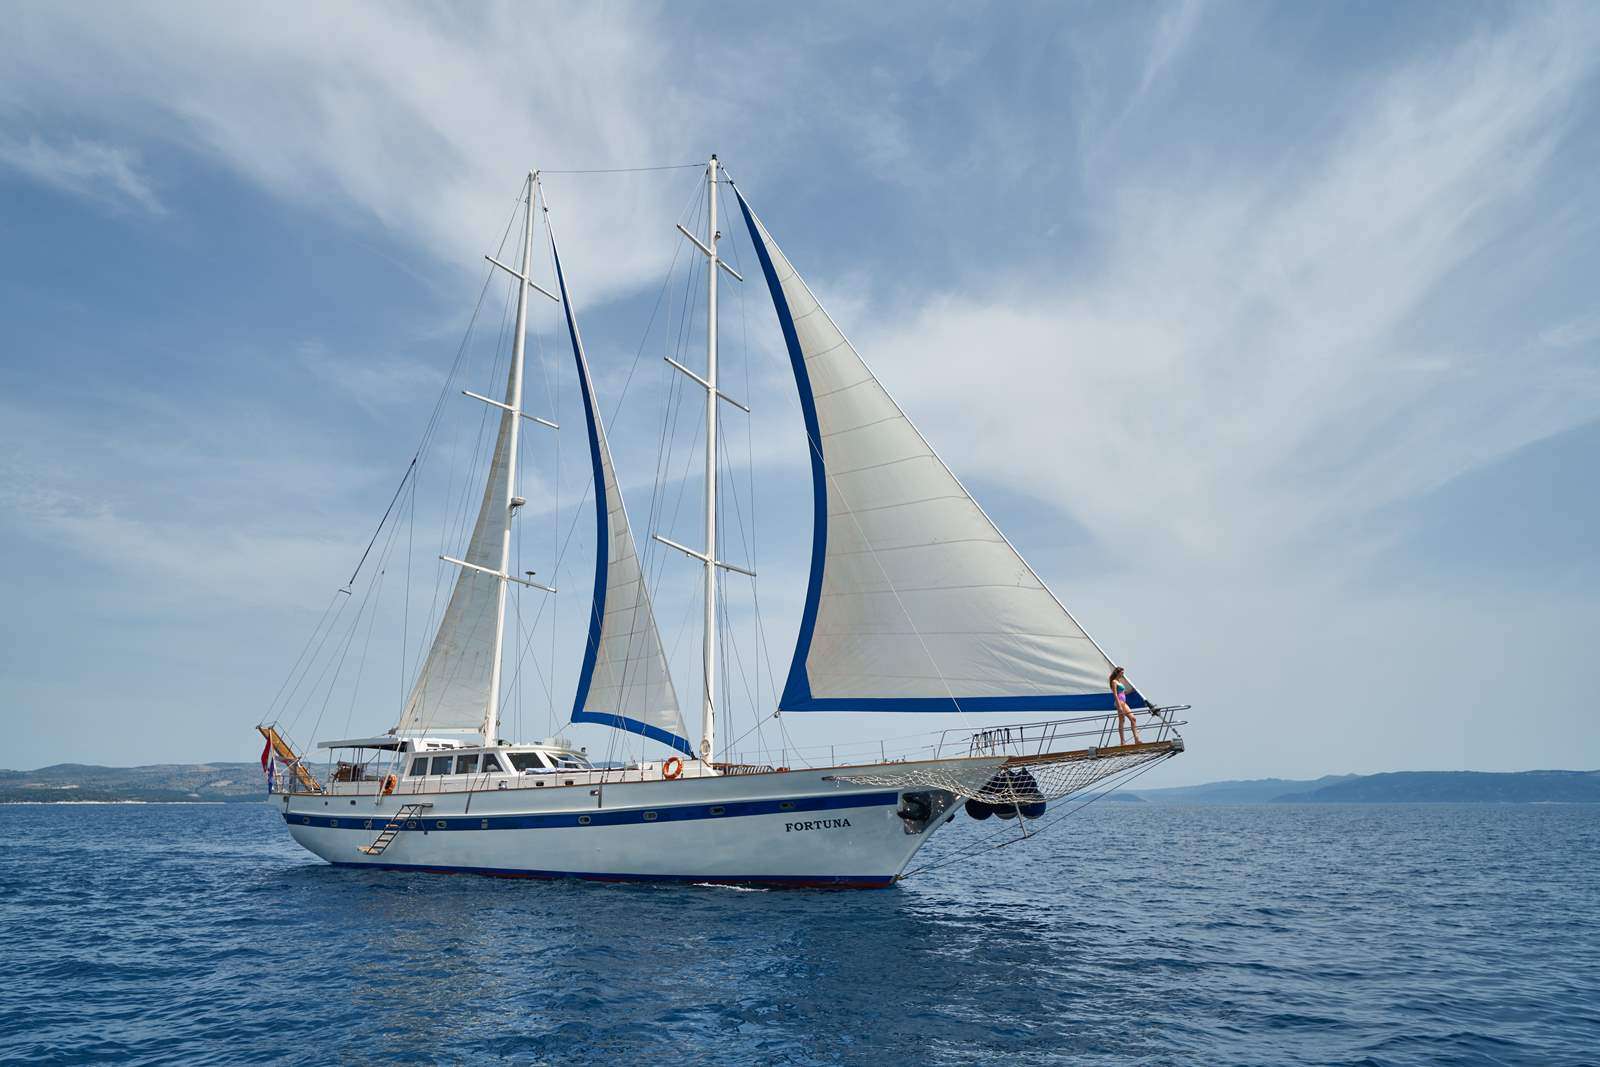 Motor Sailing Yacht 'FORTUNA', 12 PAX, 4 Crew, 108.00 Ft, 33.00 Meters, Built 1994, Aegean Build, Refit Year 2014